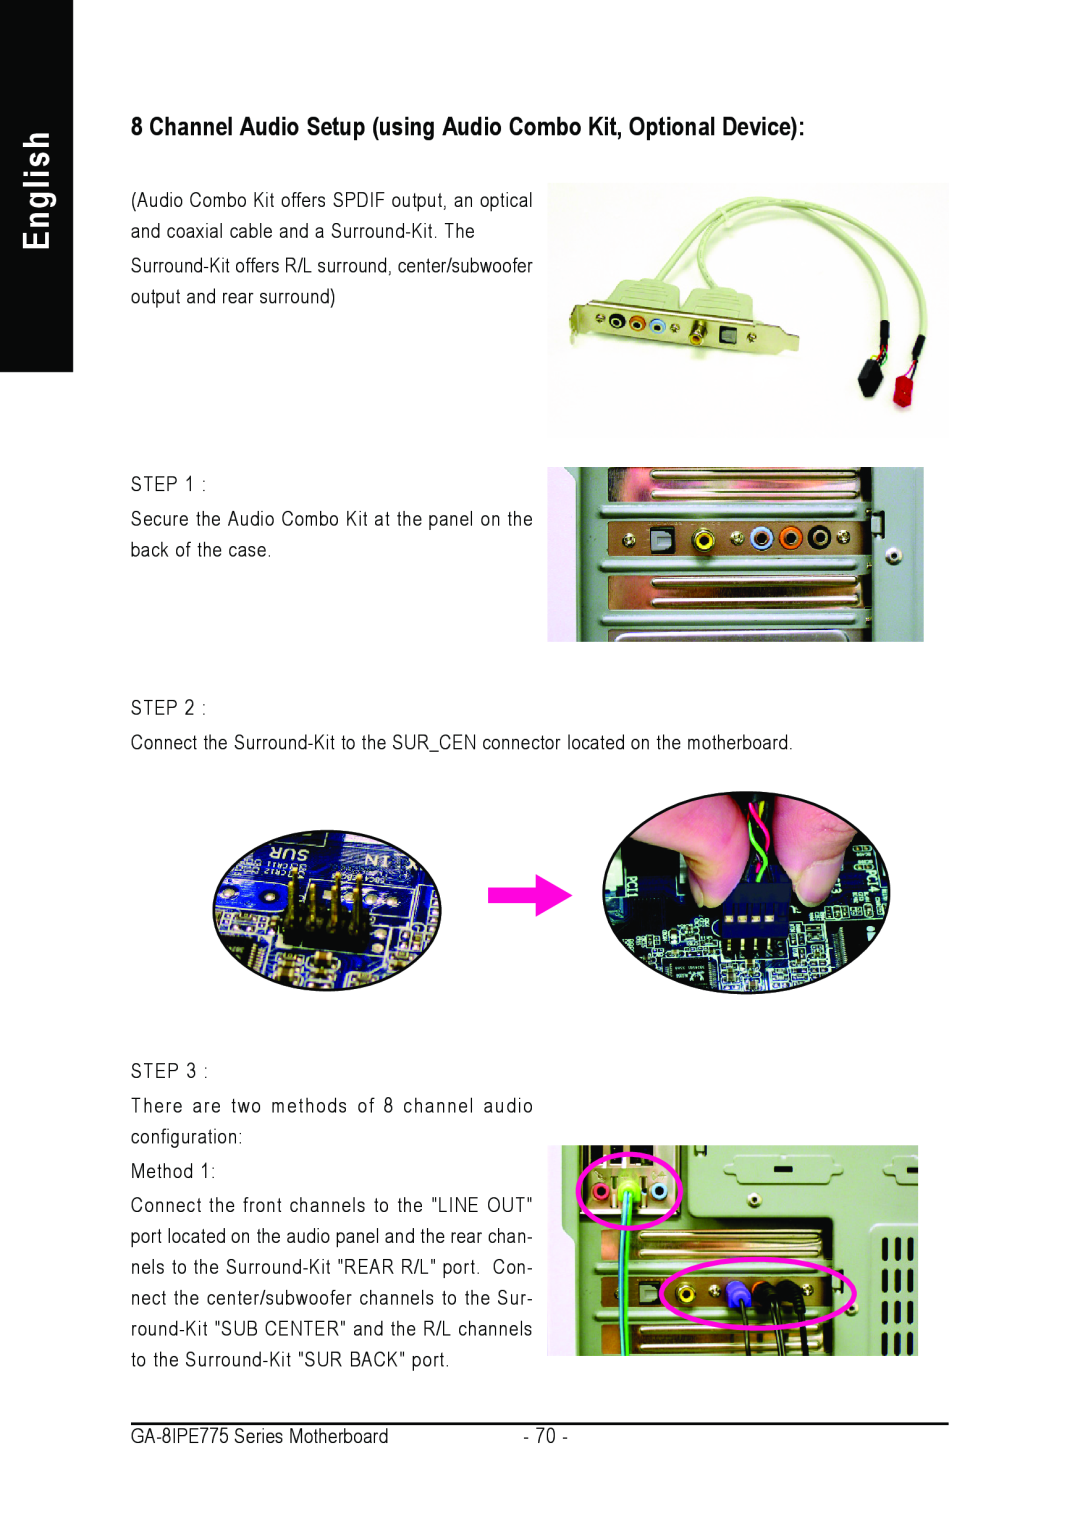 Gigabyte AGP 4X/8X manual English, Channel Audio Setup using Audio Combo Kit, Optional Device 